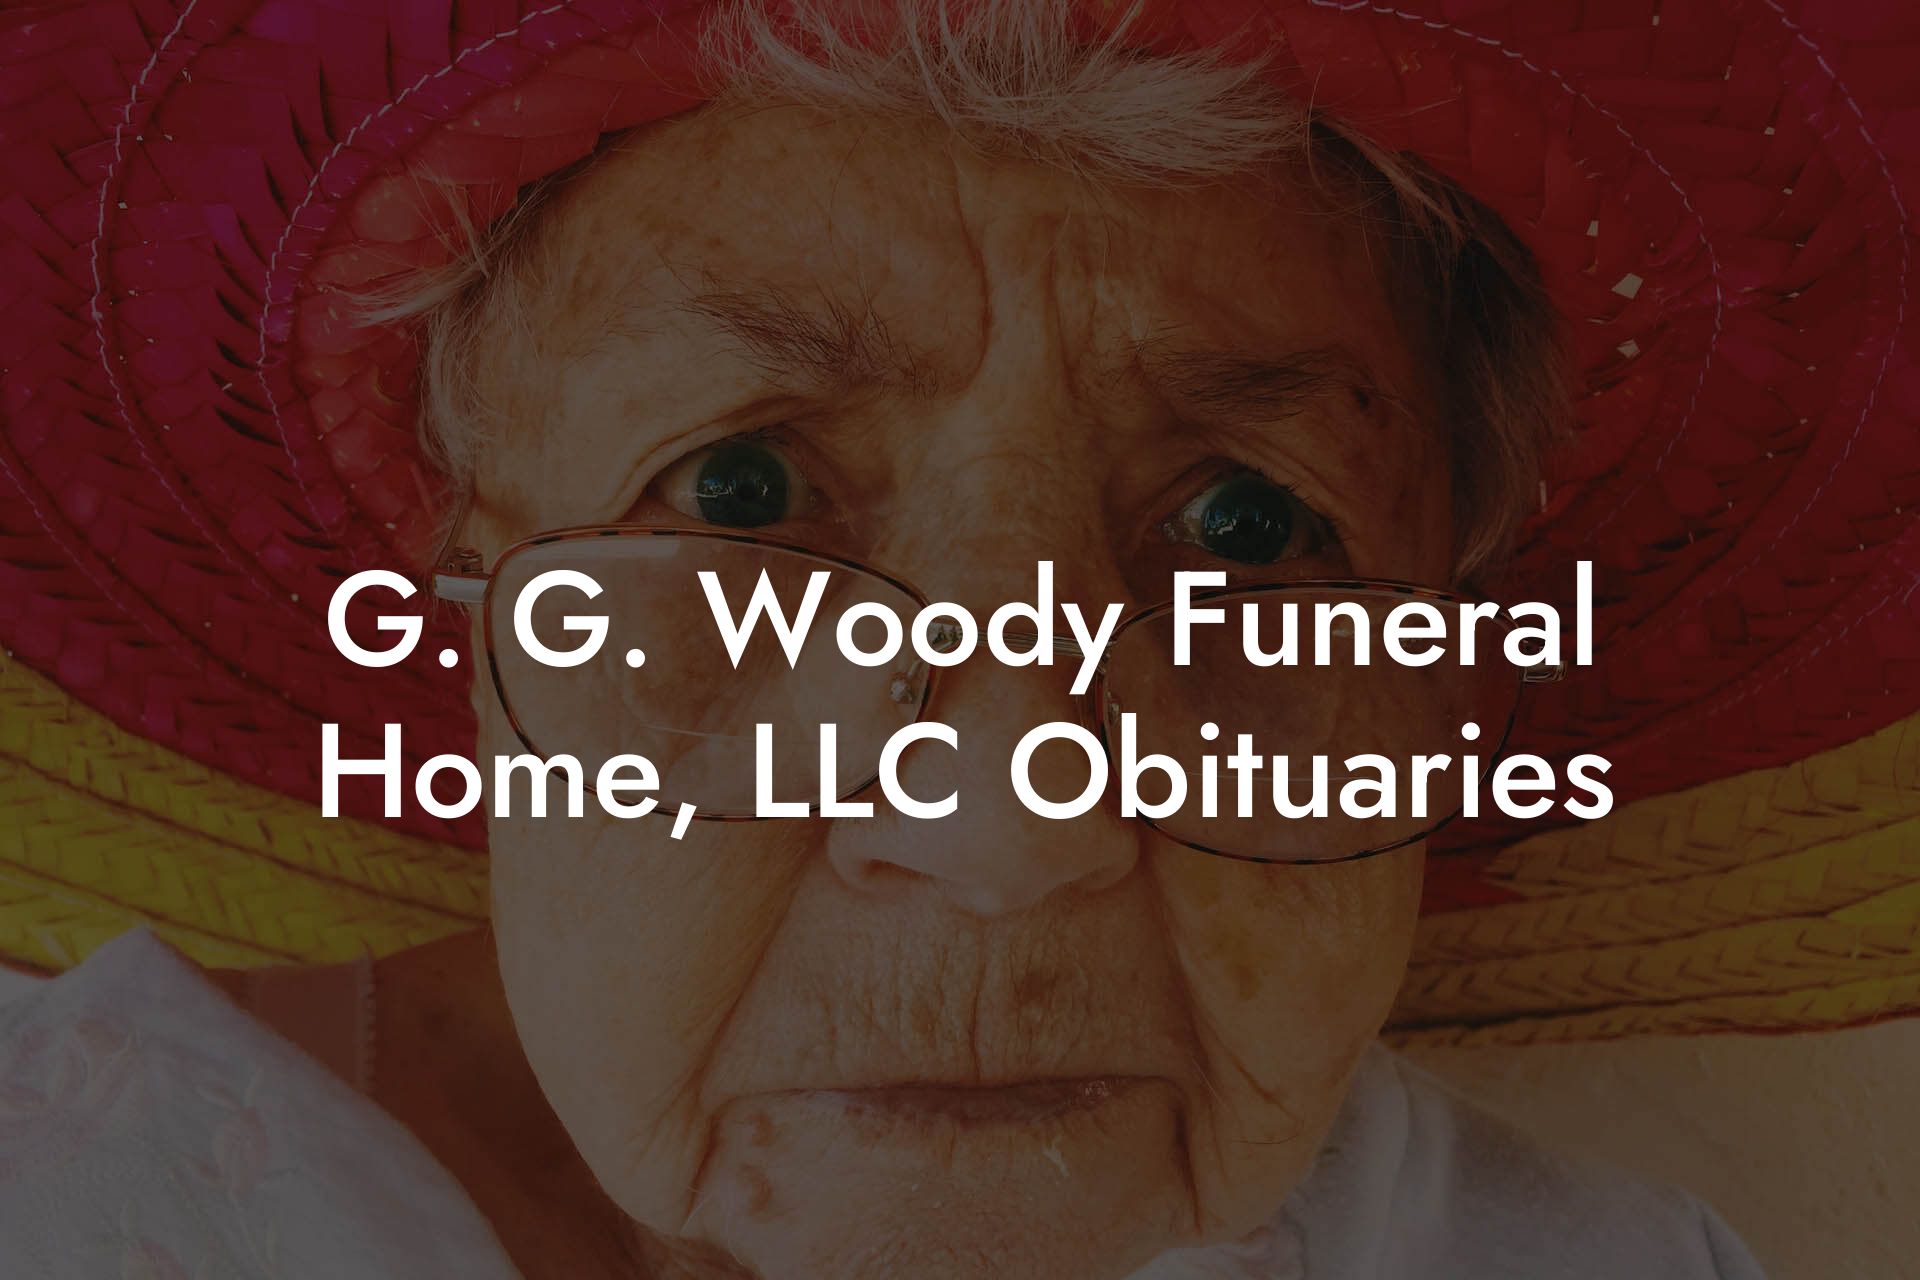 G. G. Woody Funeral Home, LLC Obituaries